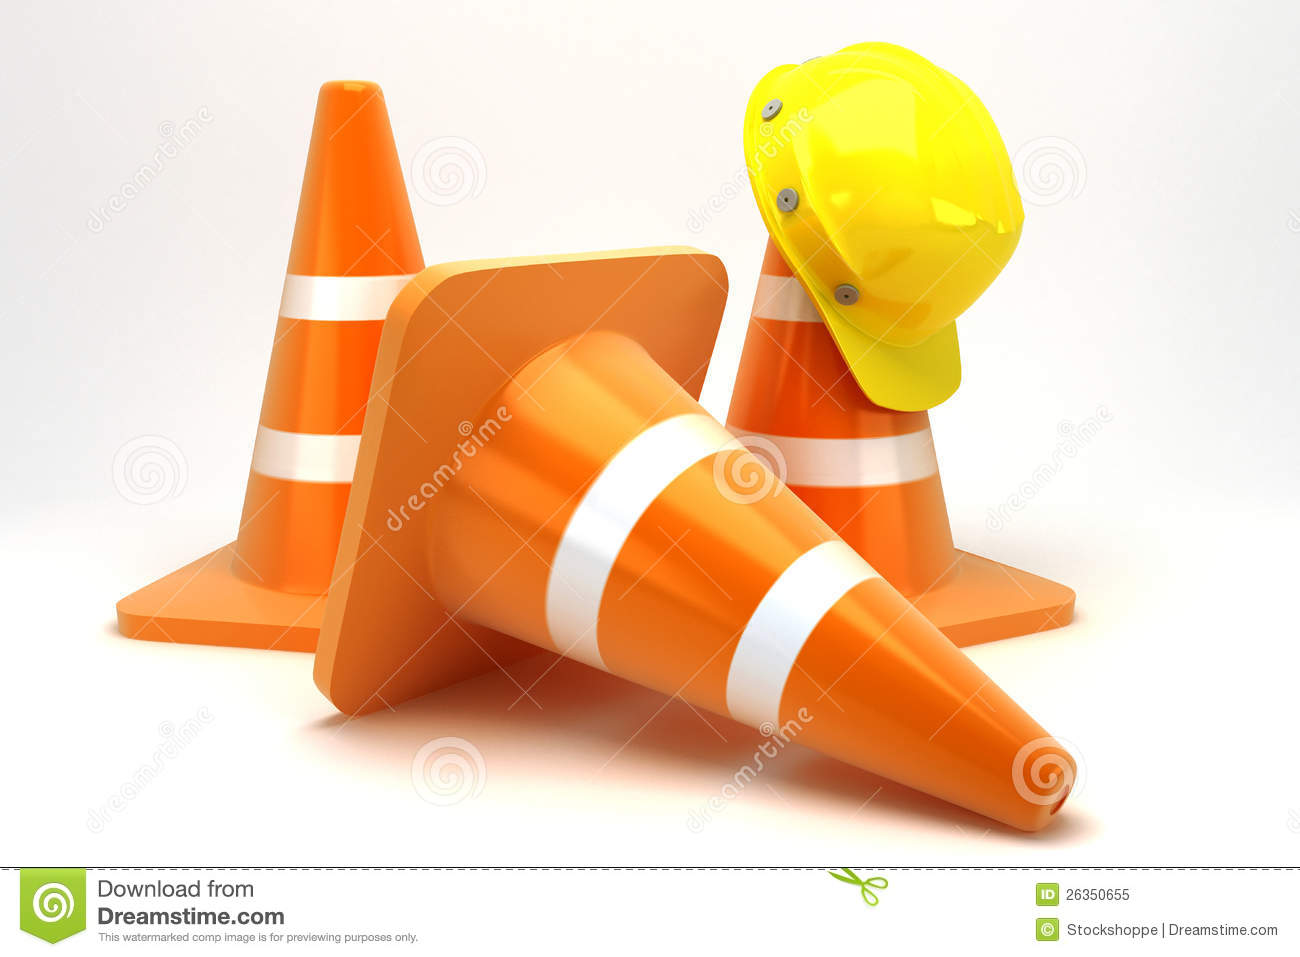 Construction Cone Clipart.